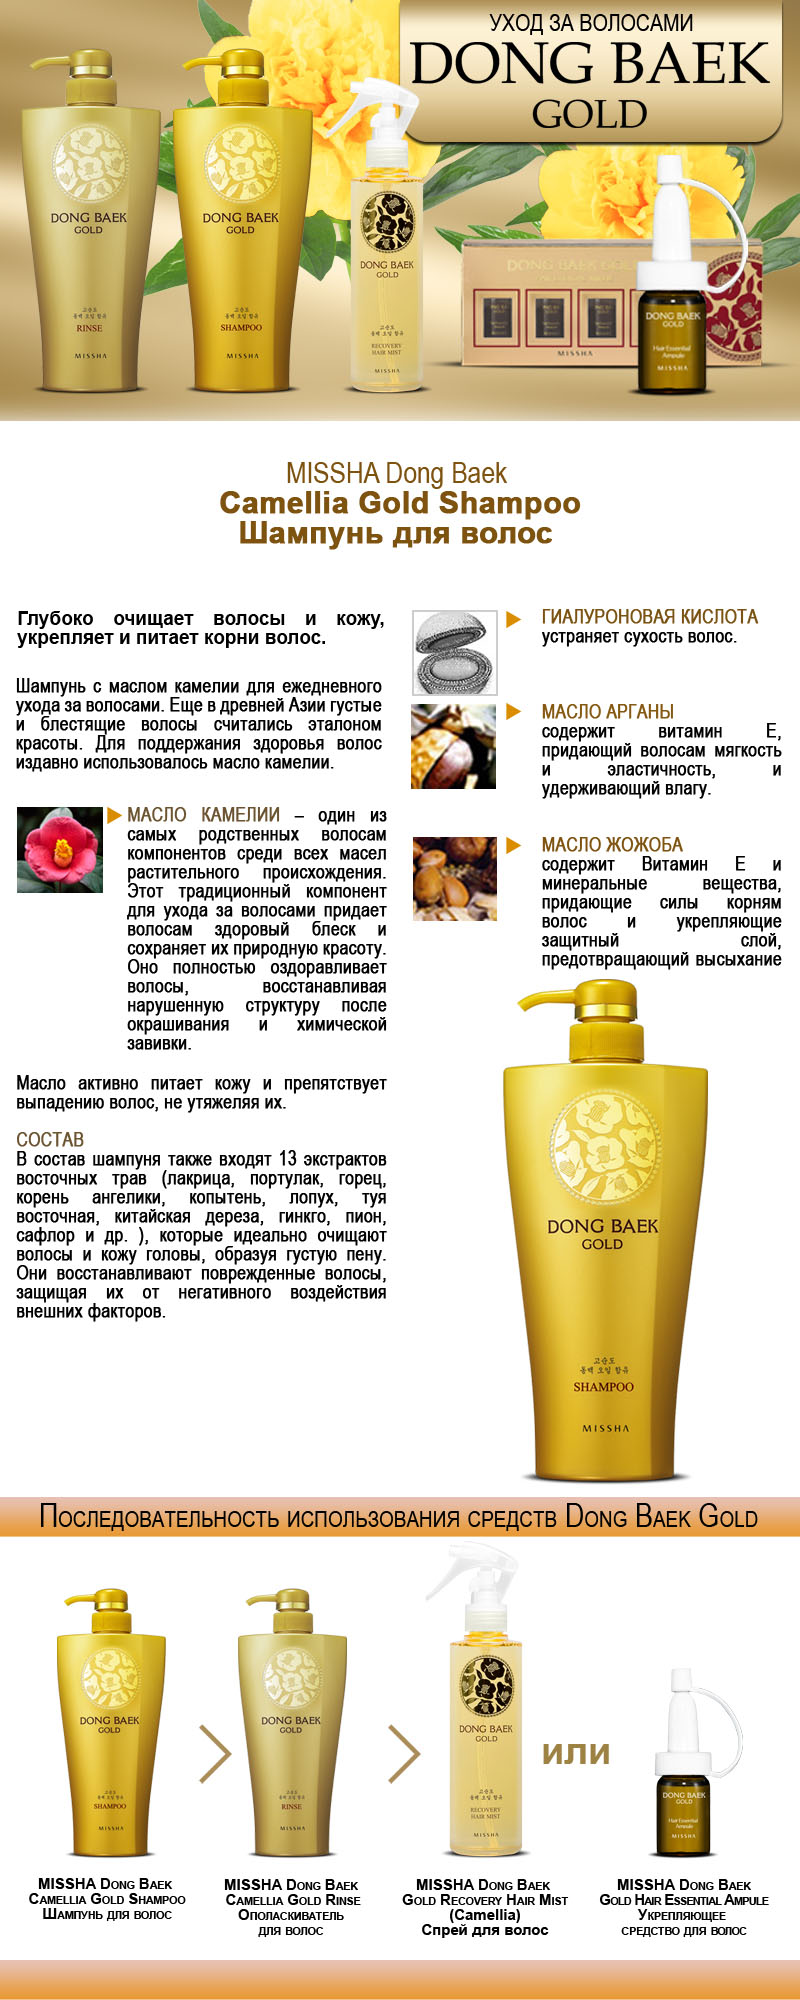 Premium DongBaek (Camellia) Gold Shampoo